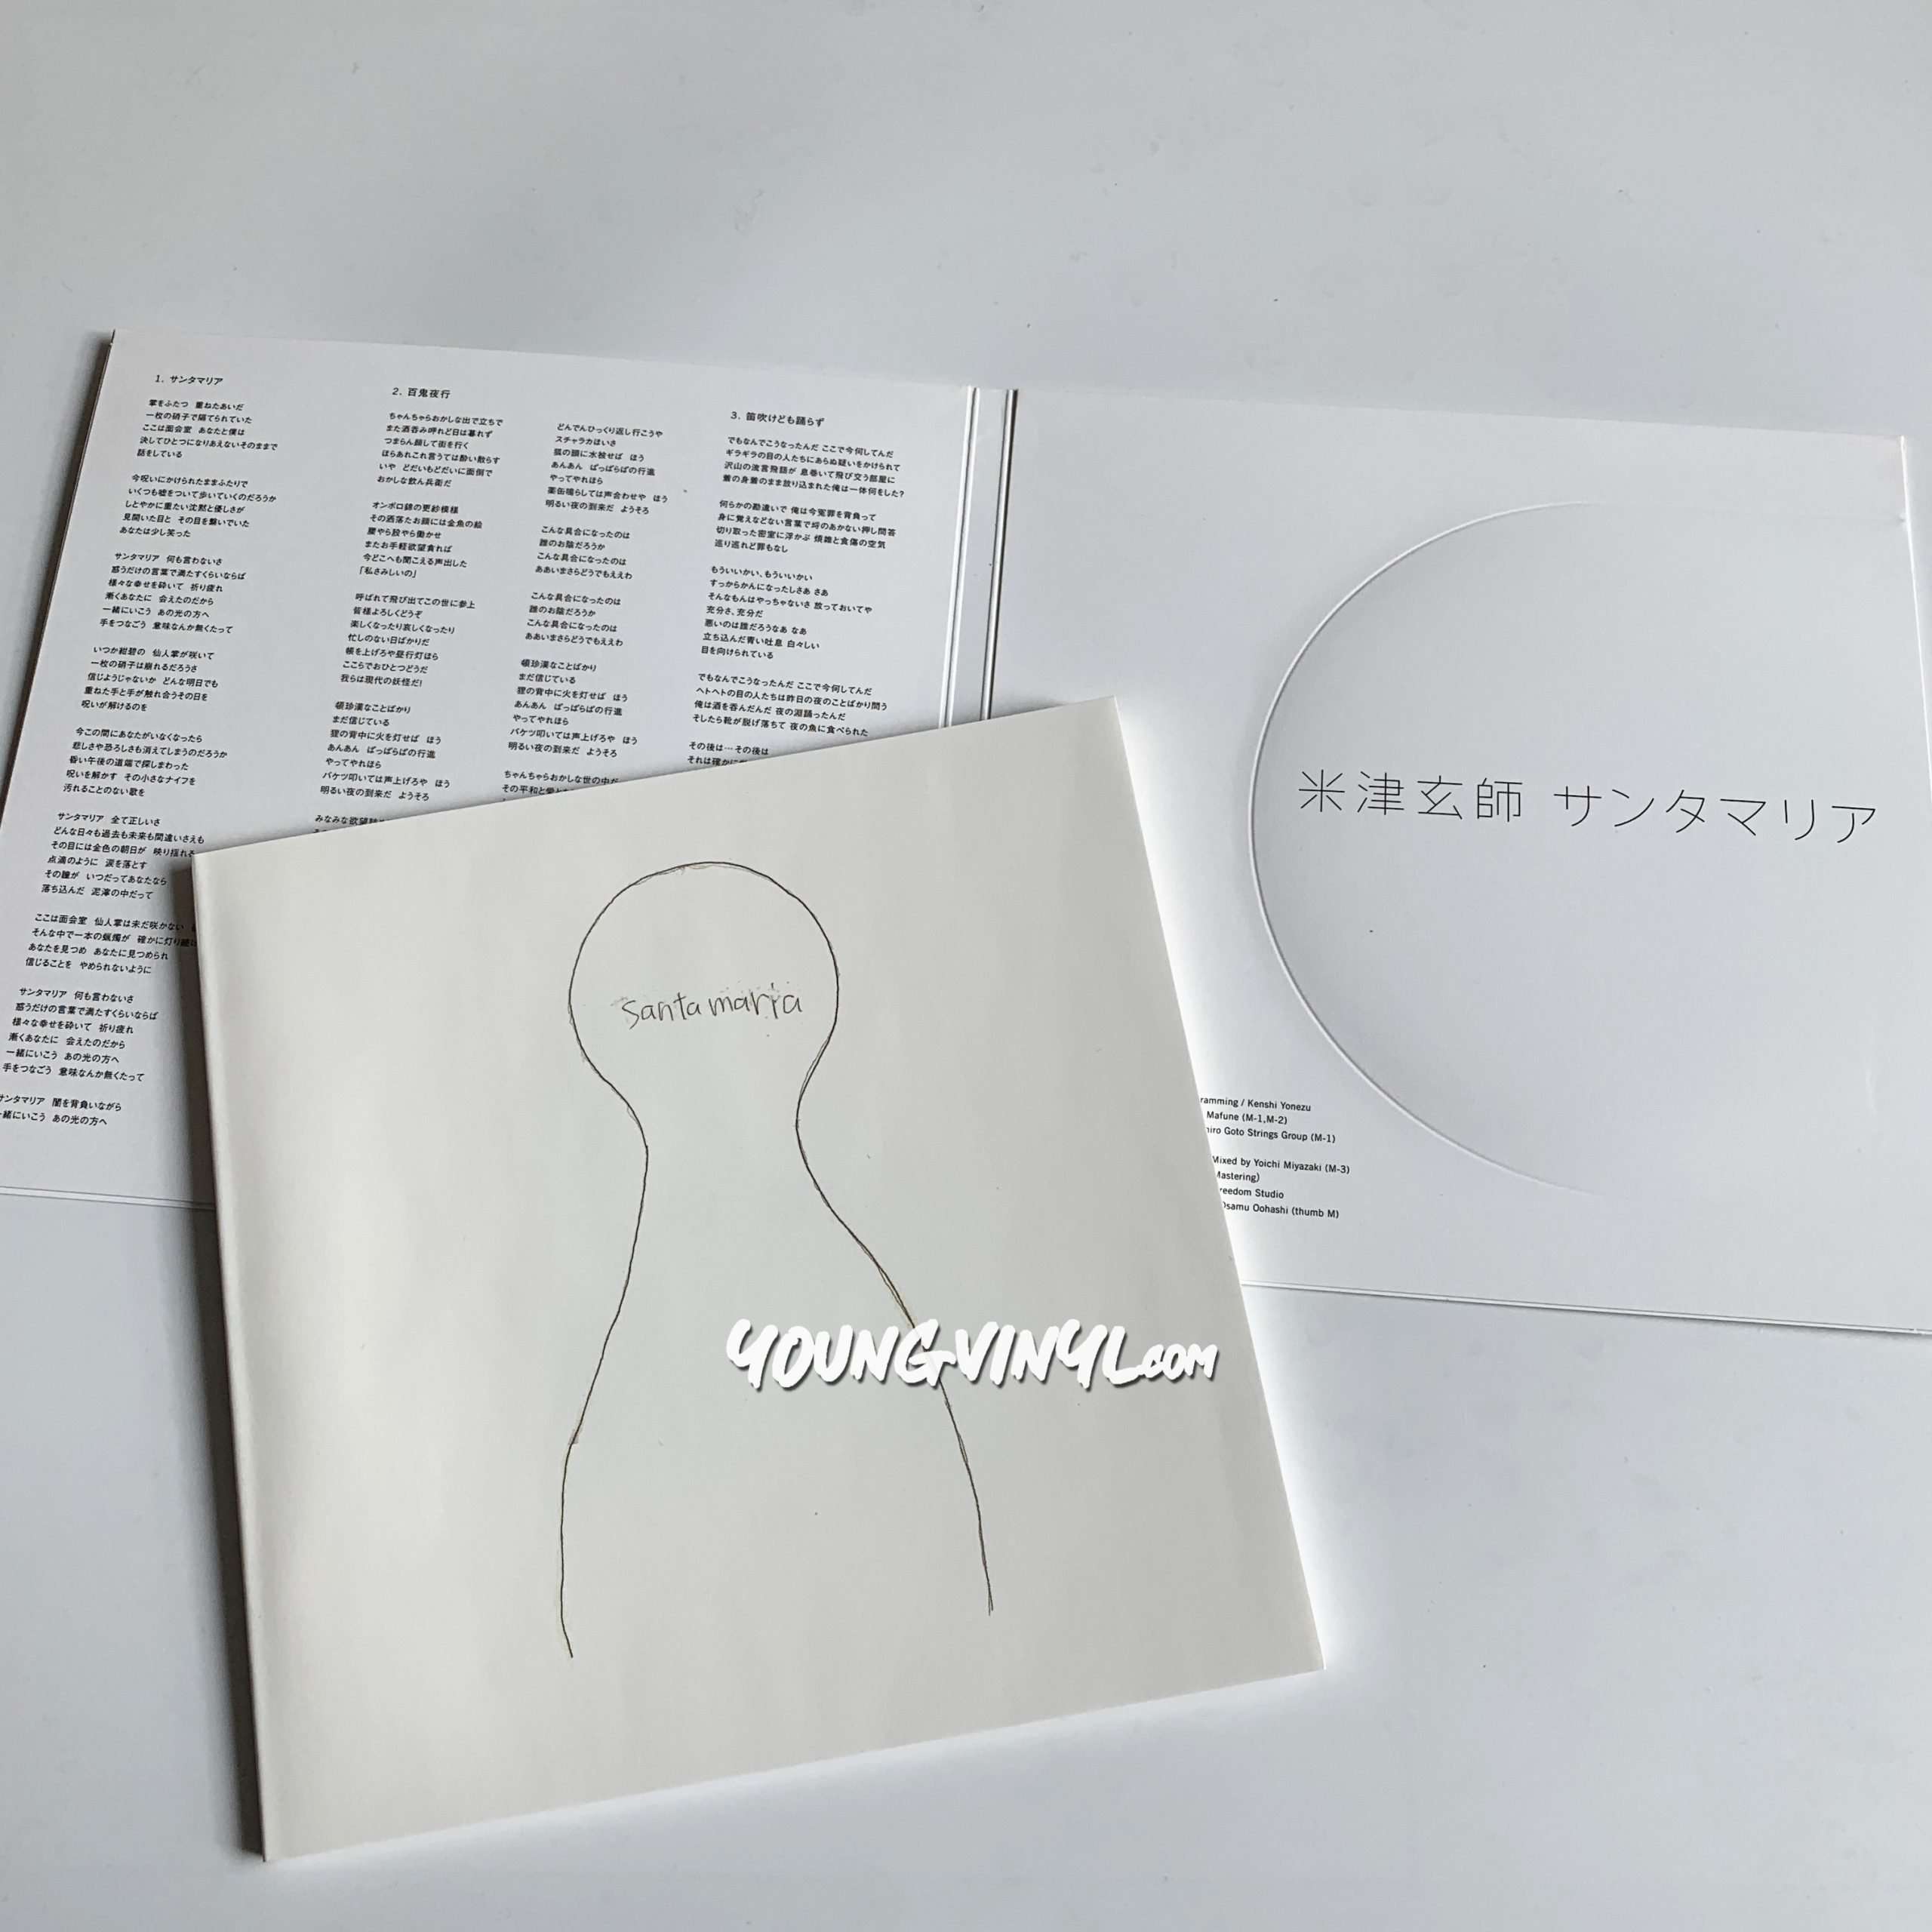 Kenshi Yonezu サンタマリア CD Limited Edition 米津玄師 - Young Vinyl